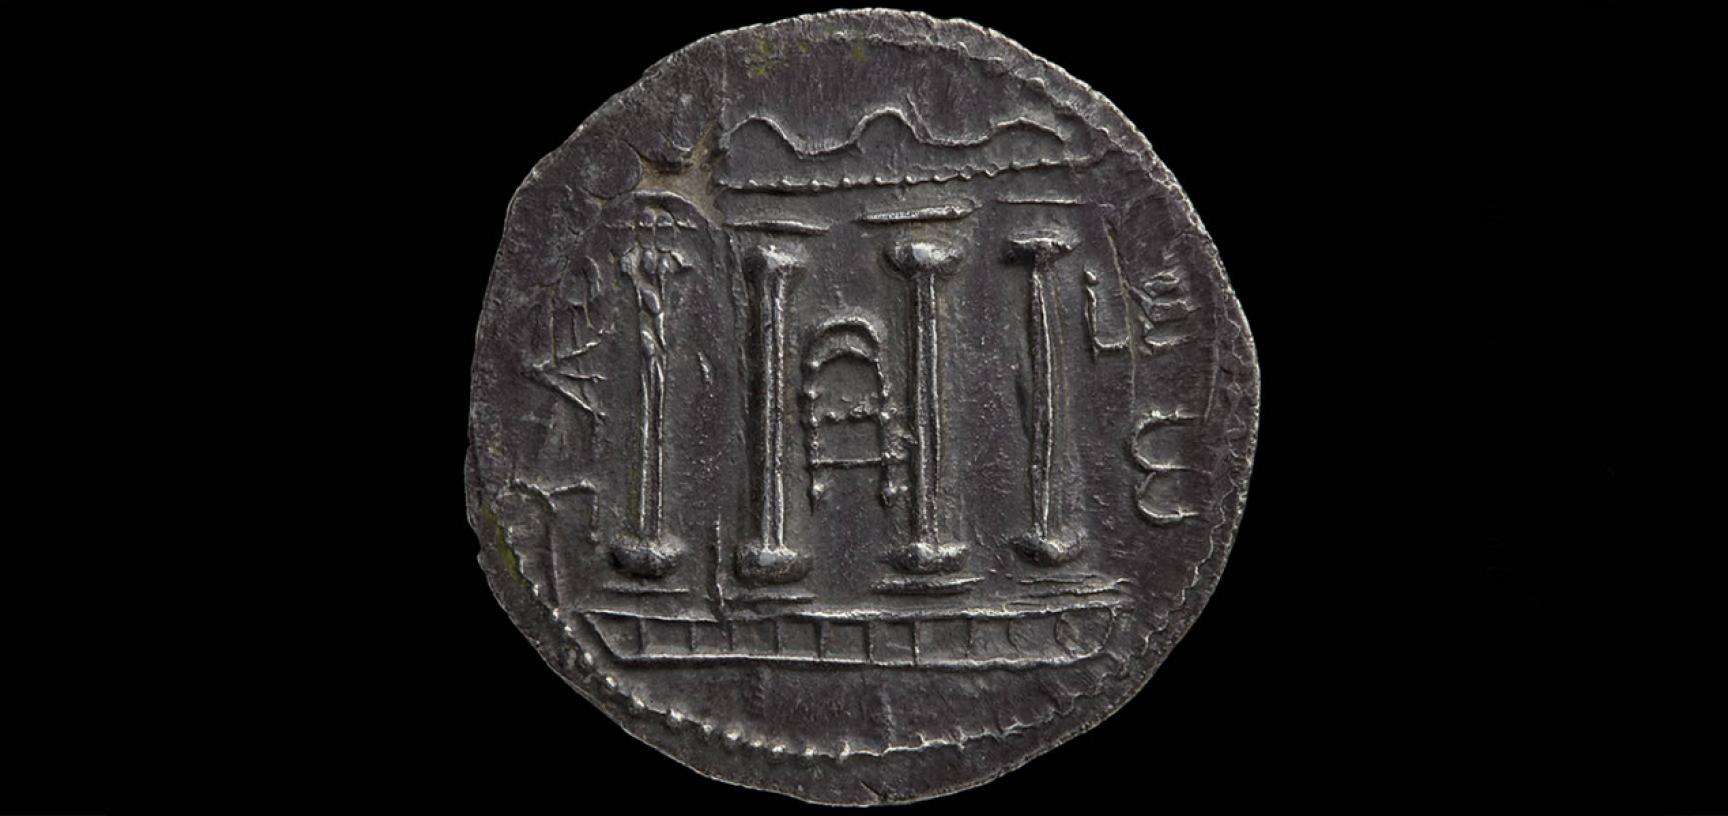 Roman provincial silver coin, Judea mint, AD 132